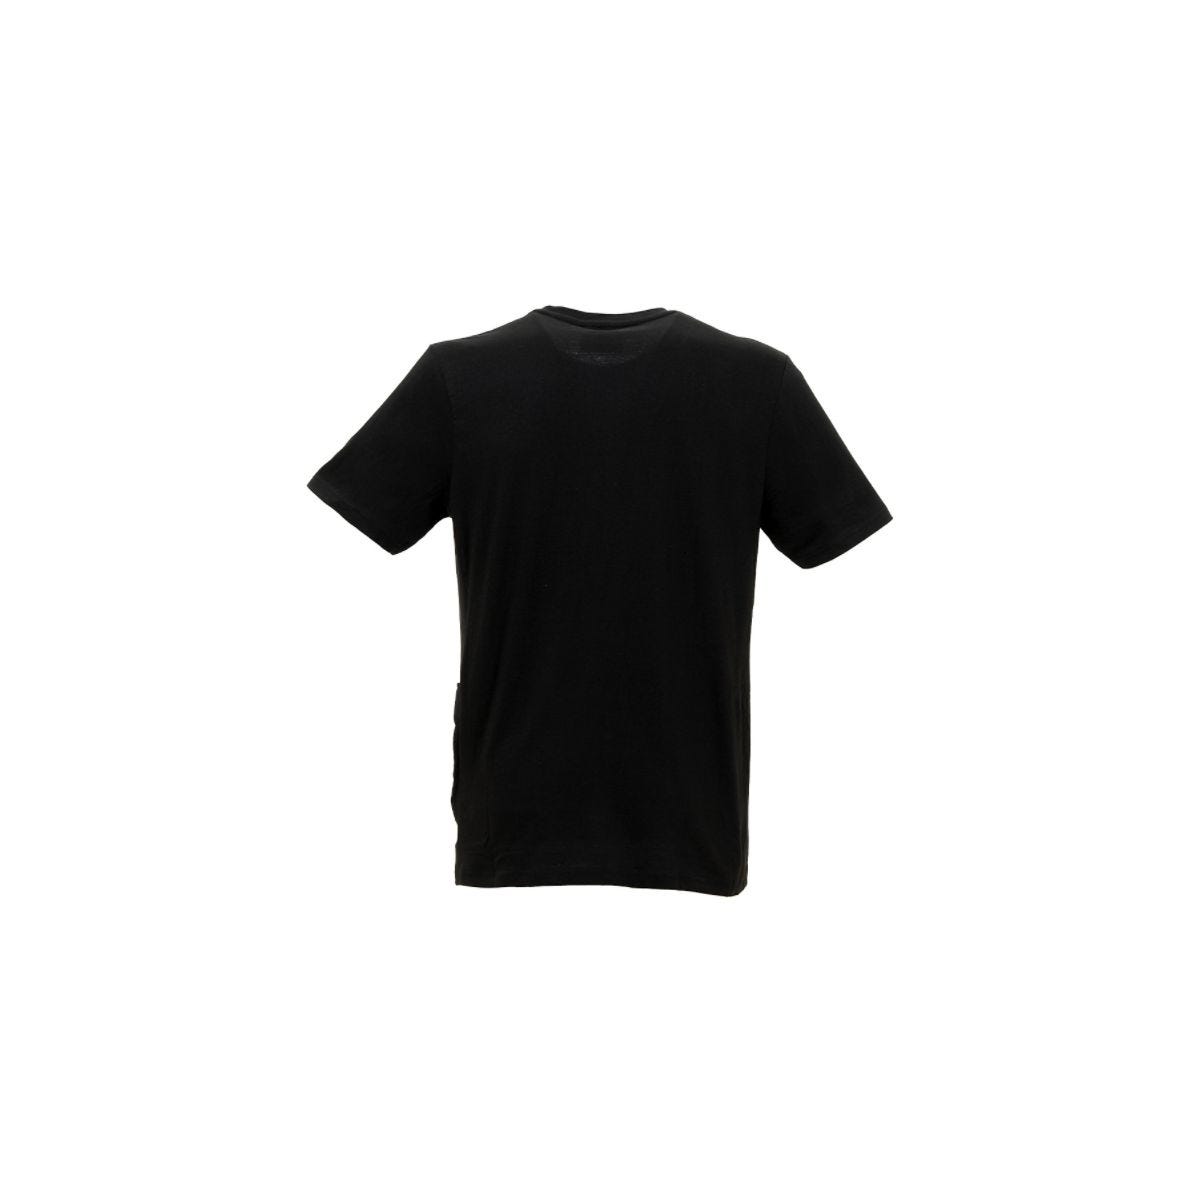 Tee-shirt ROAD Black Carbon - U Power - Taille L 4